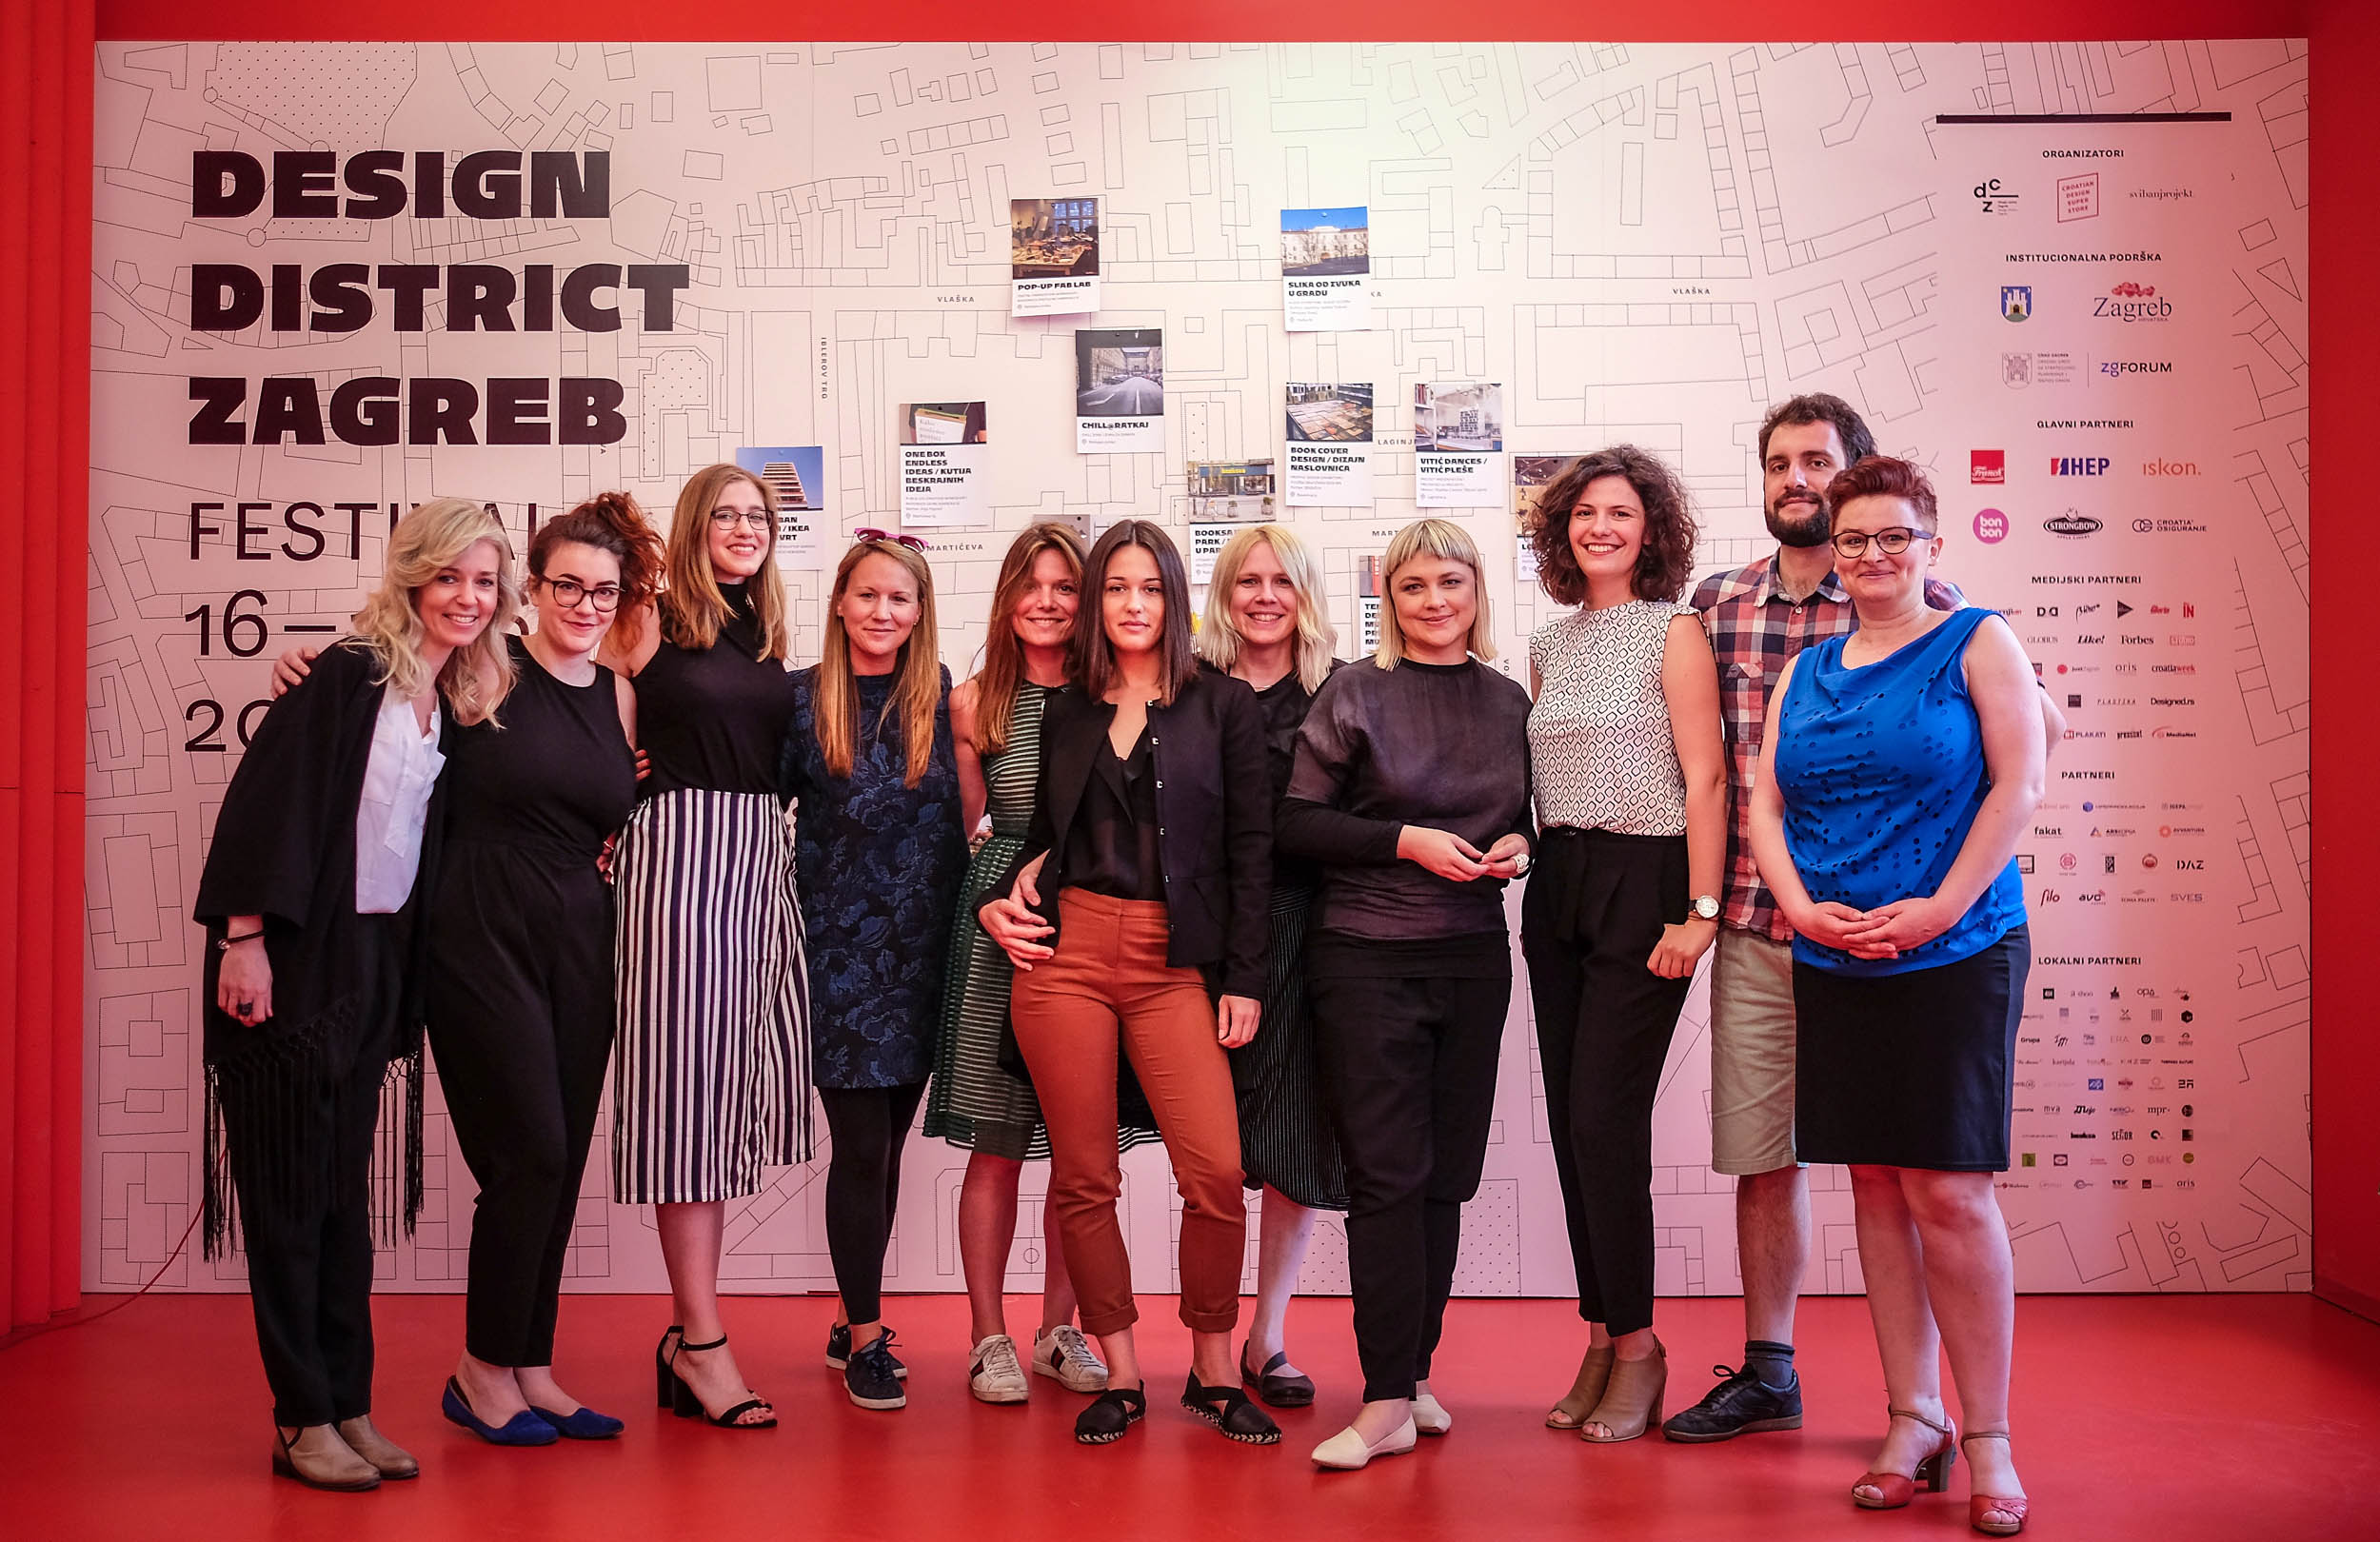 Design District Zagreb Starts on June 16th